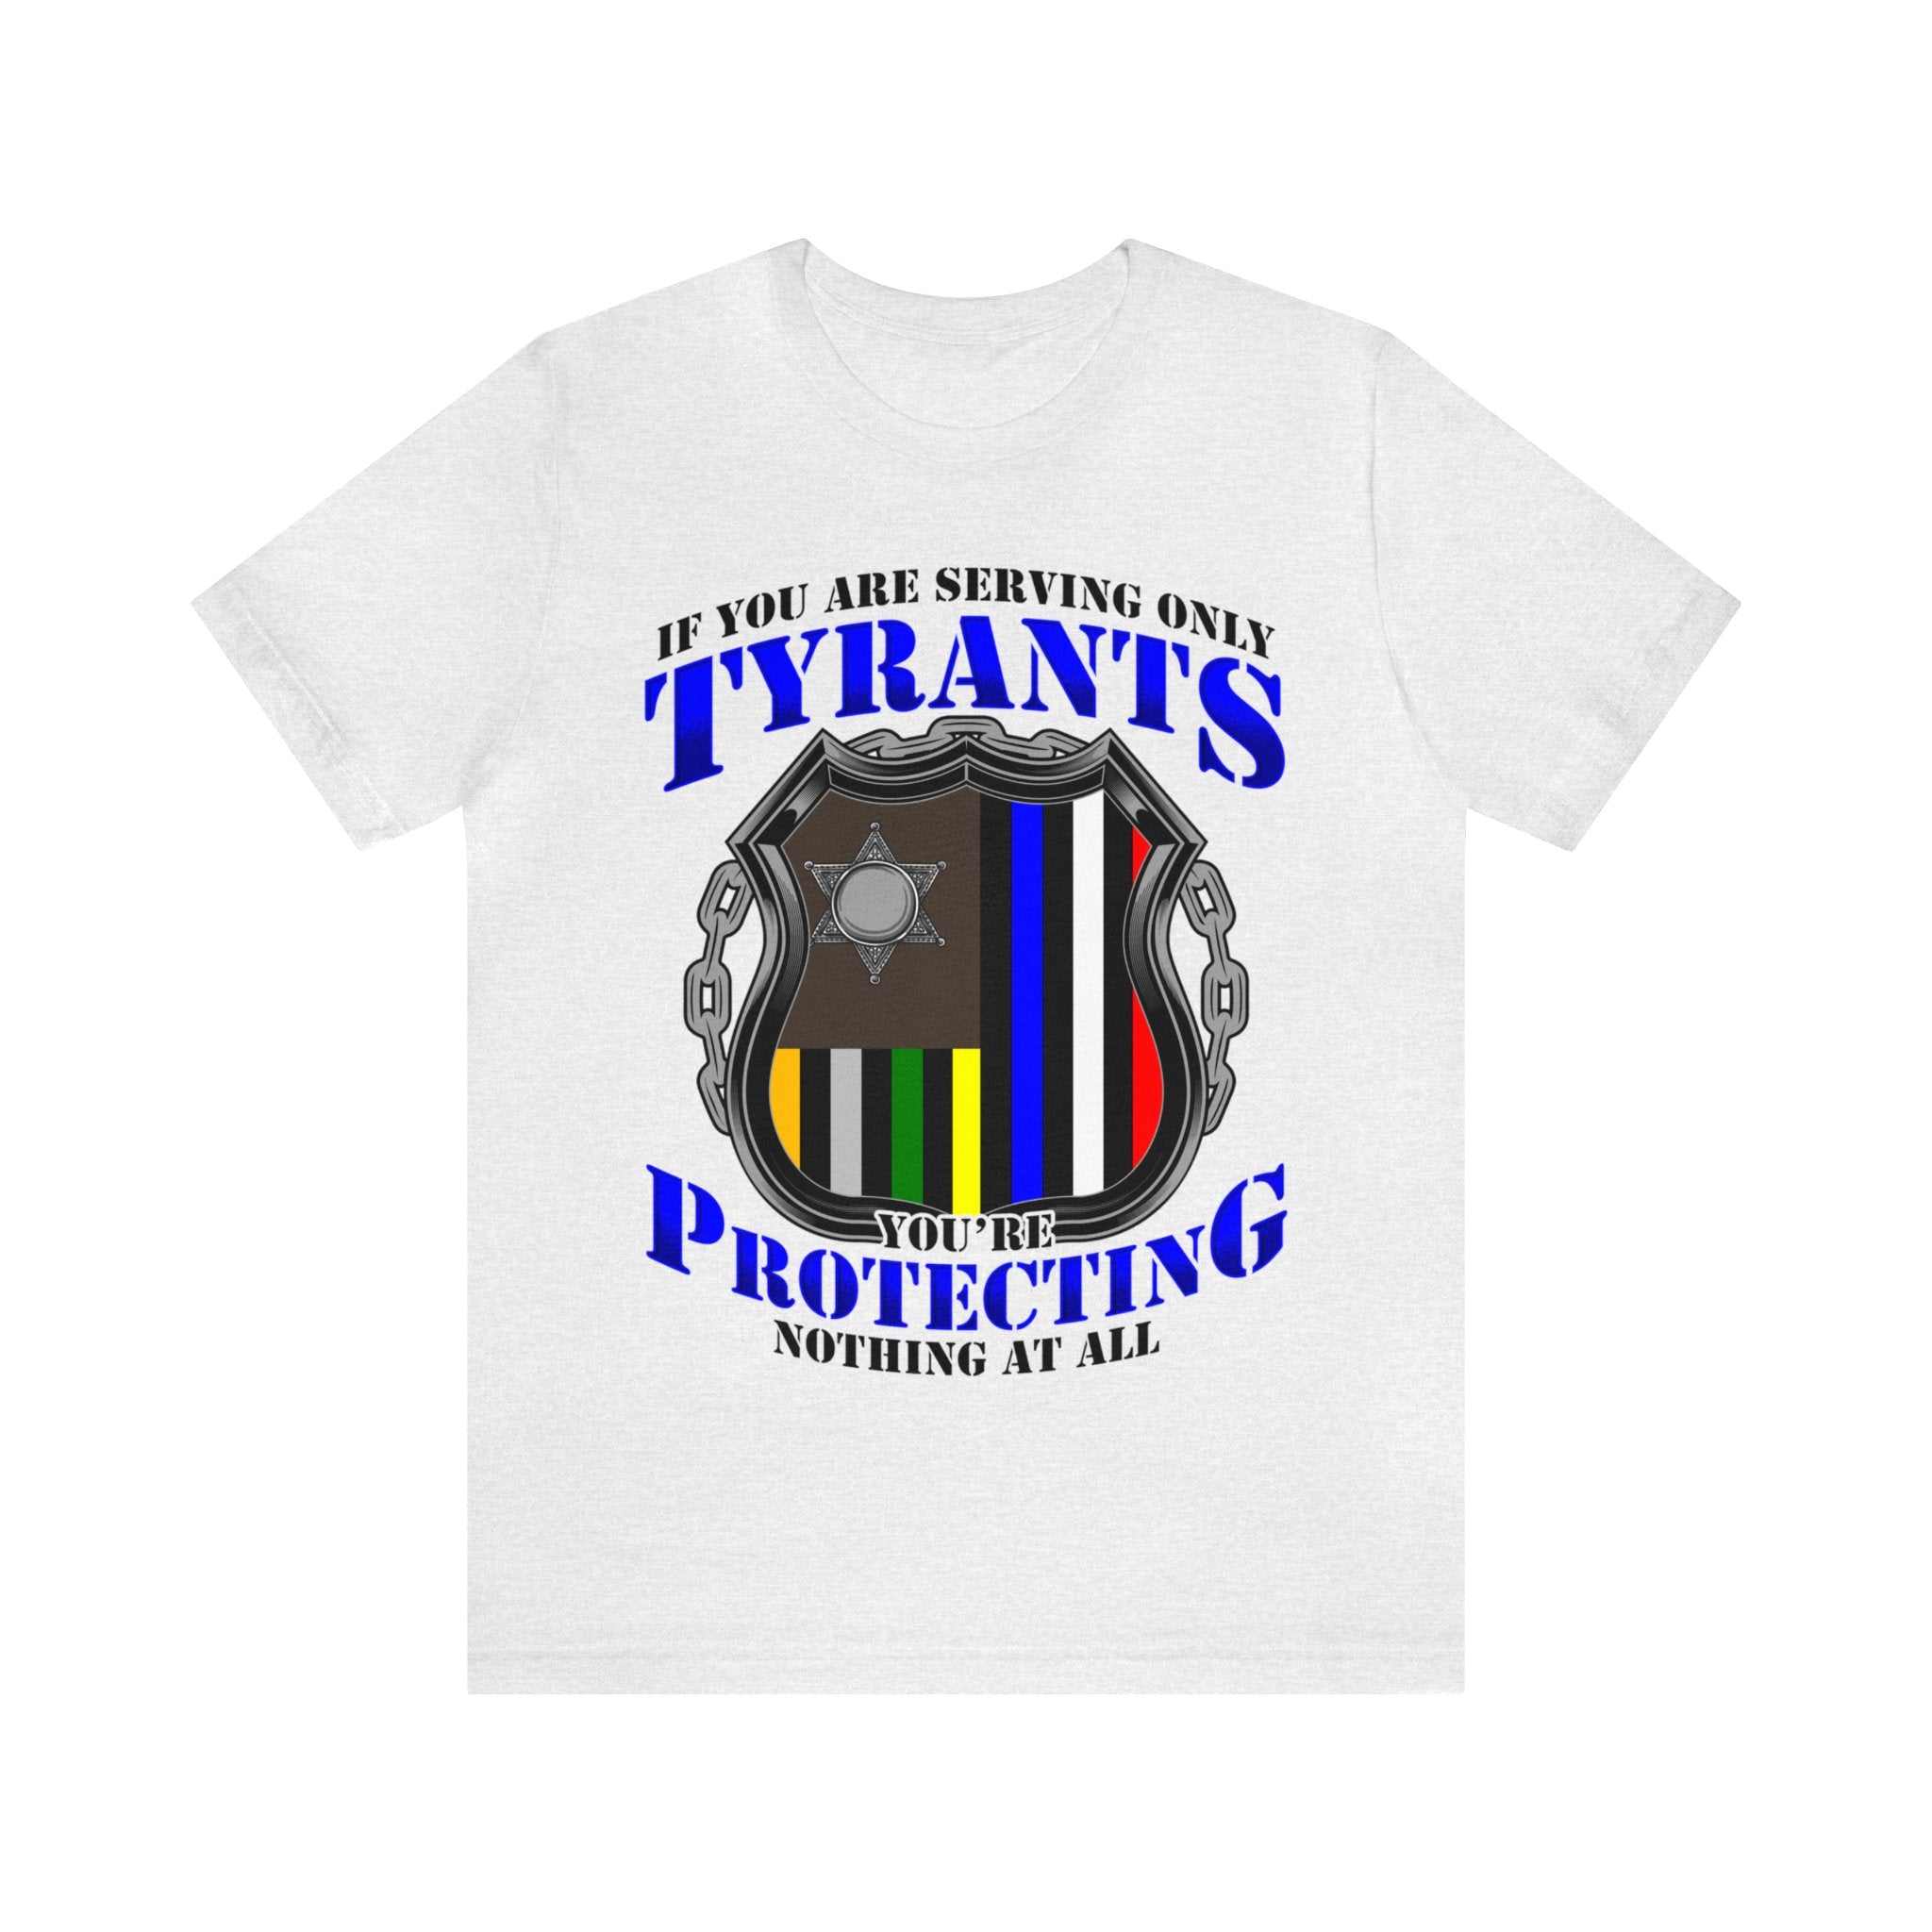 Thin Police Line Tee - Tyrants/Protecting